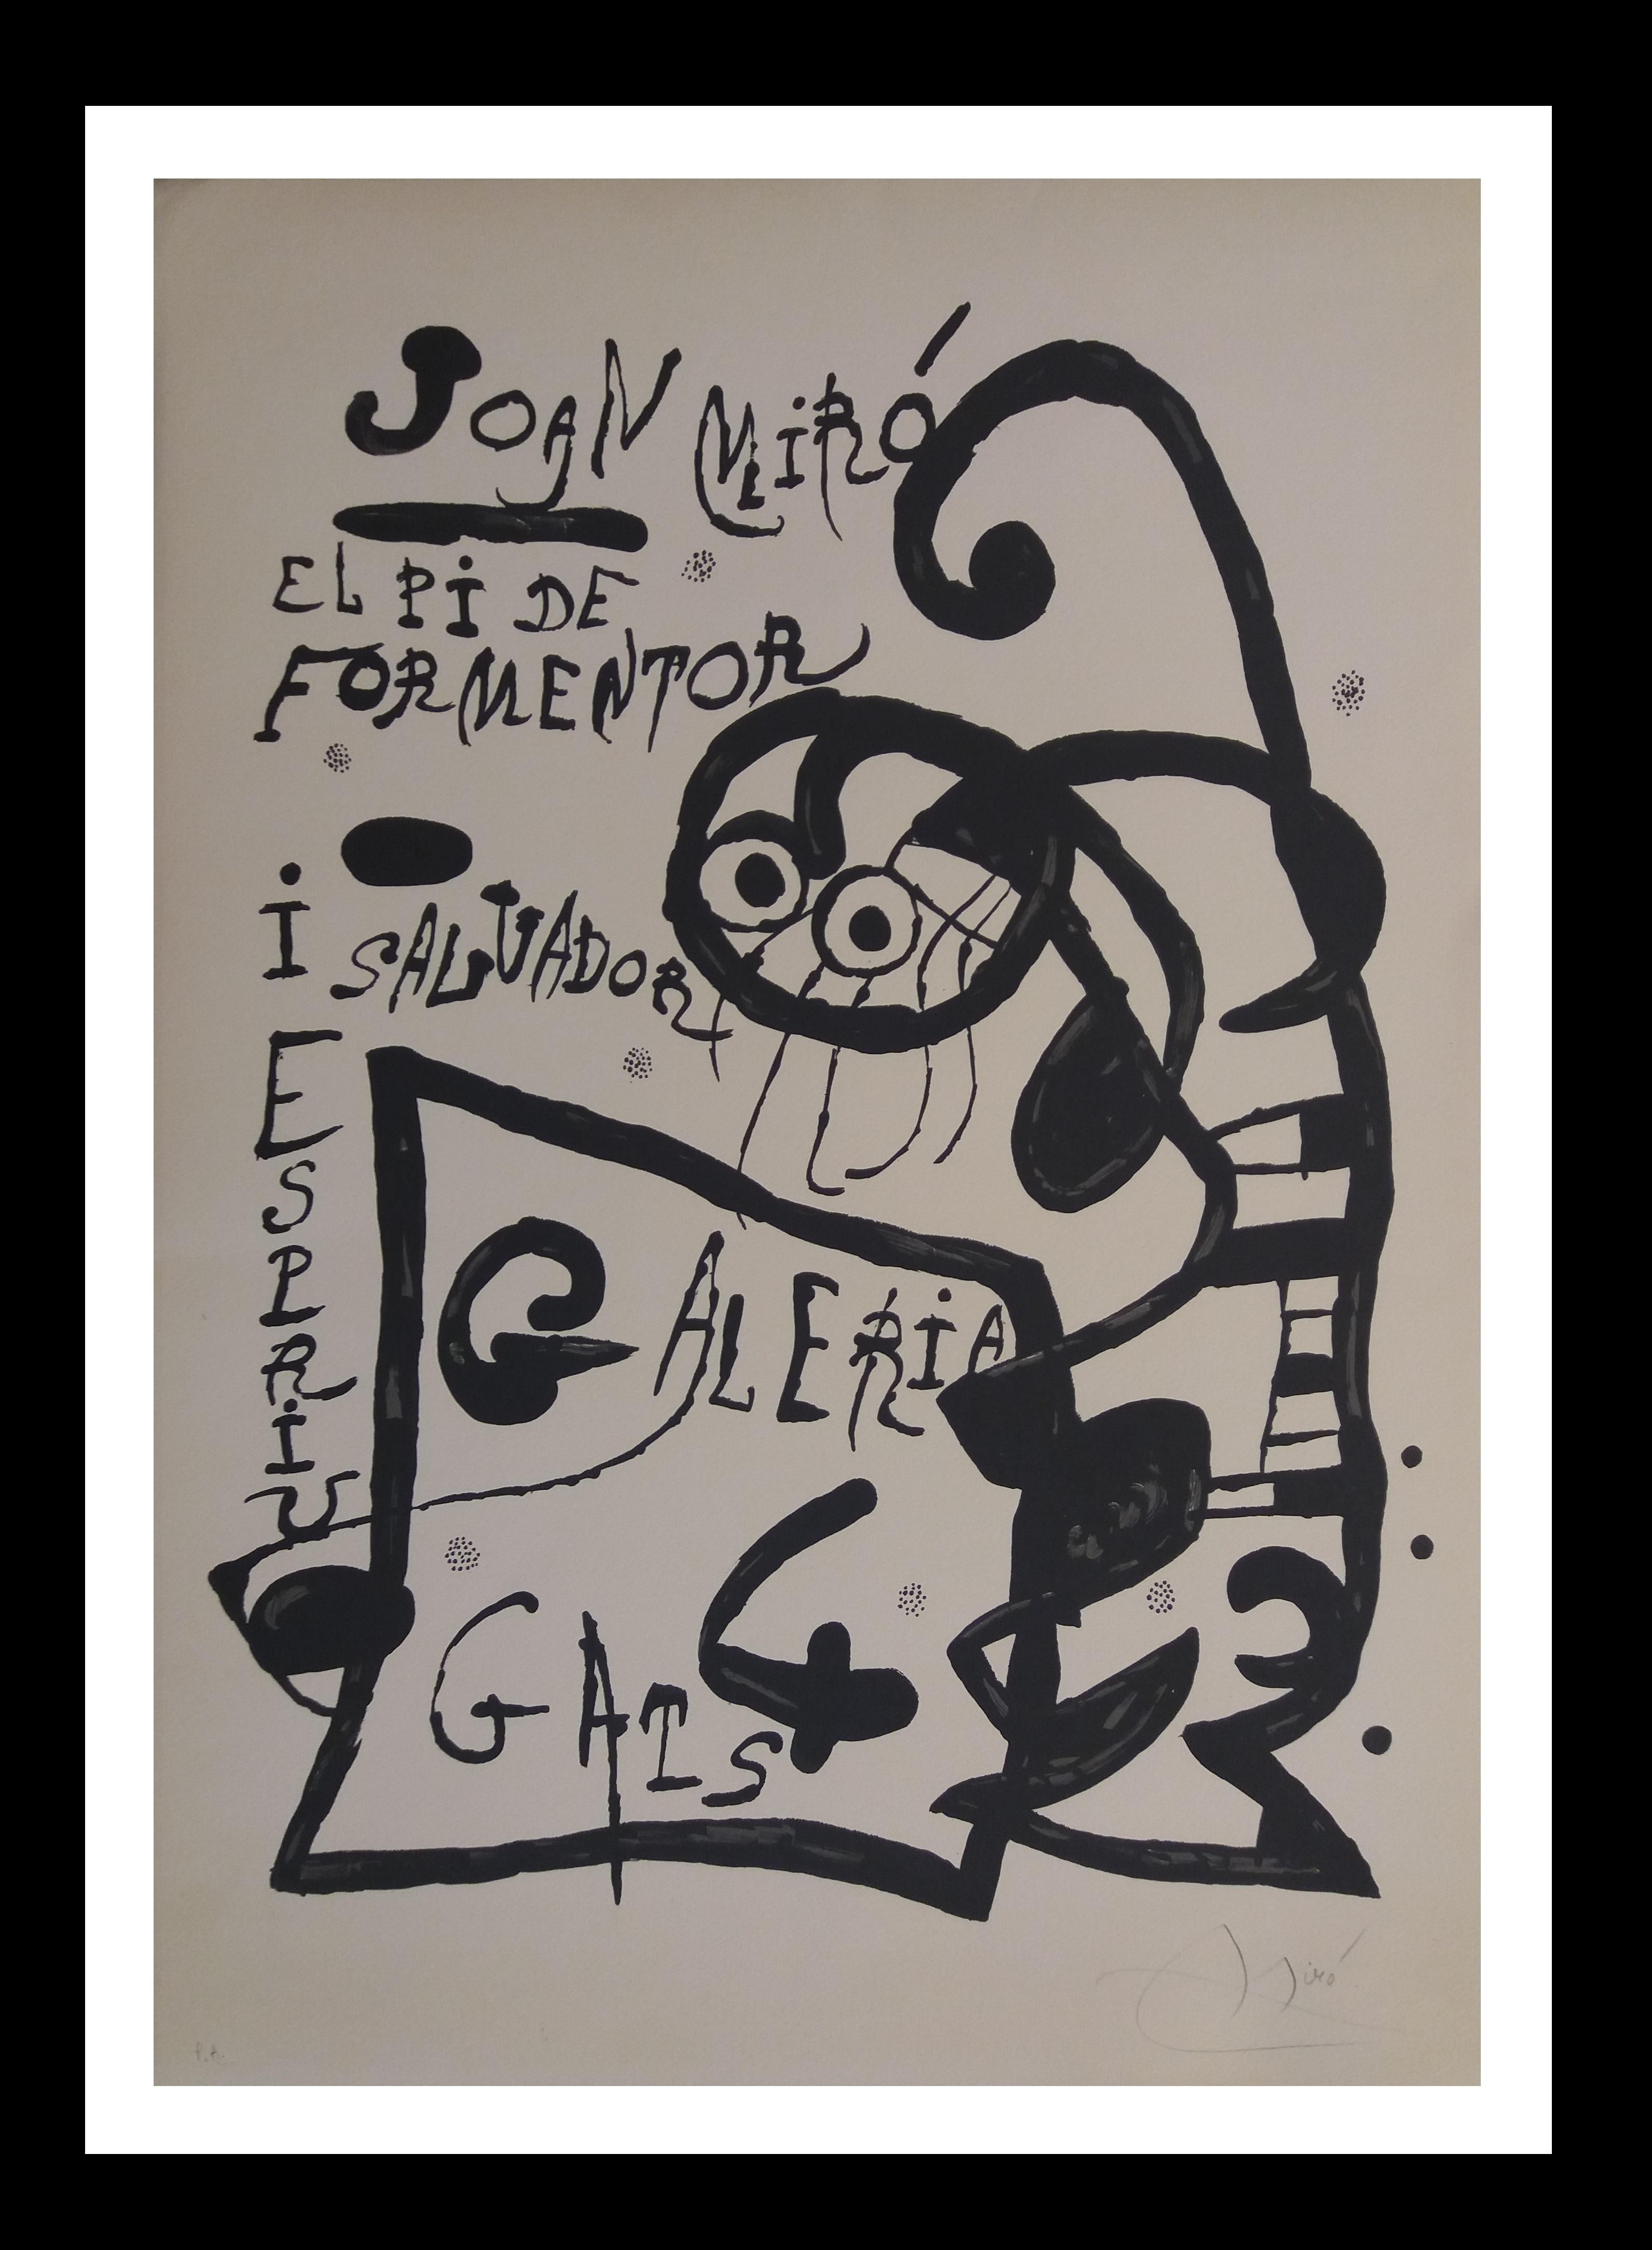 Miro. Noir. vertical. « El pi de Formentor », 1976, lithographie originale - Print de Joan Miró